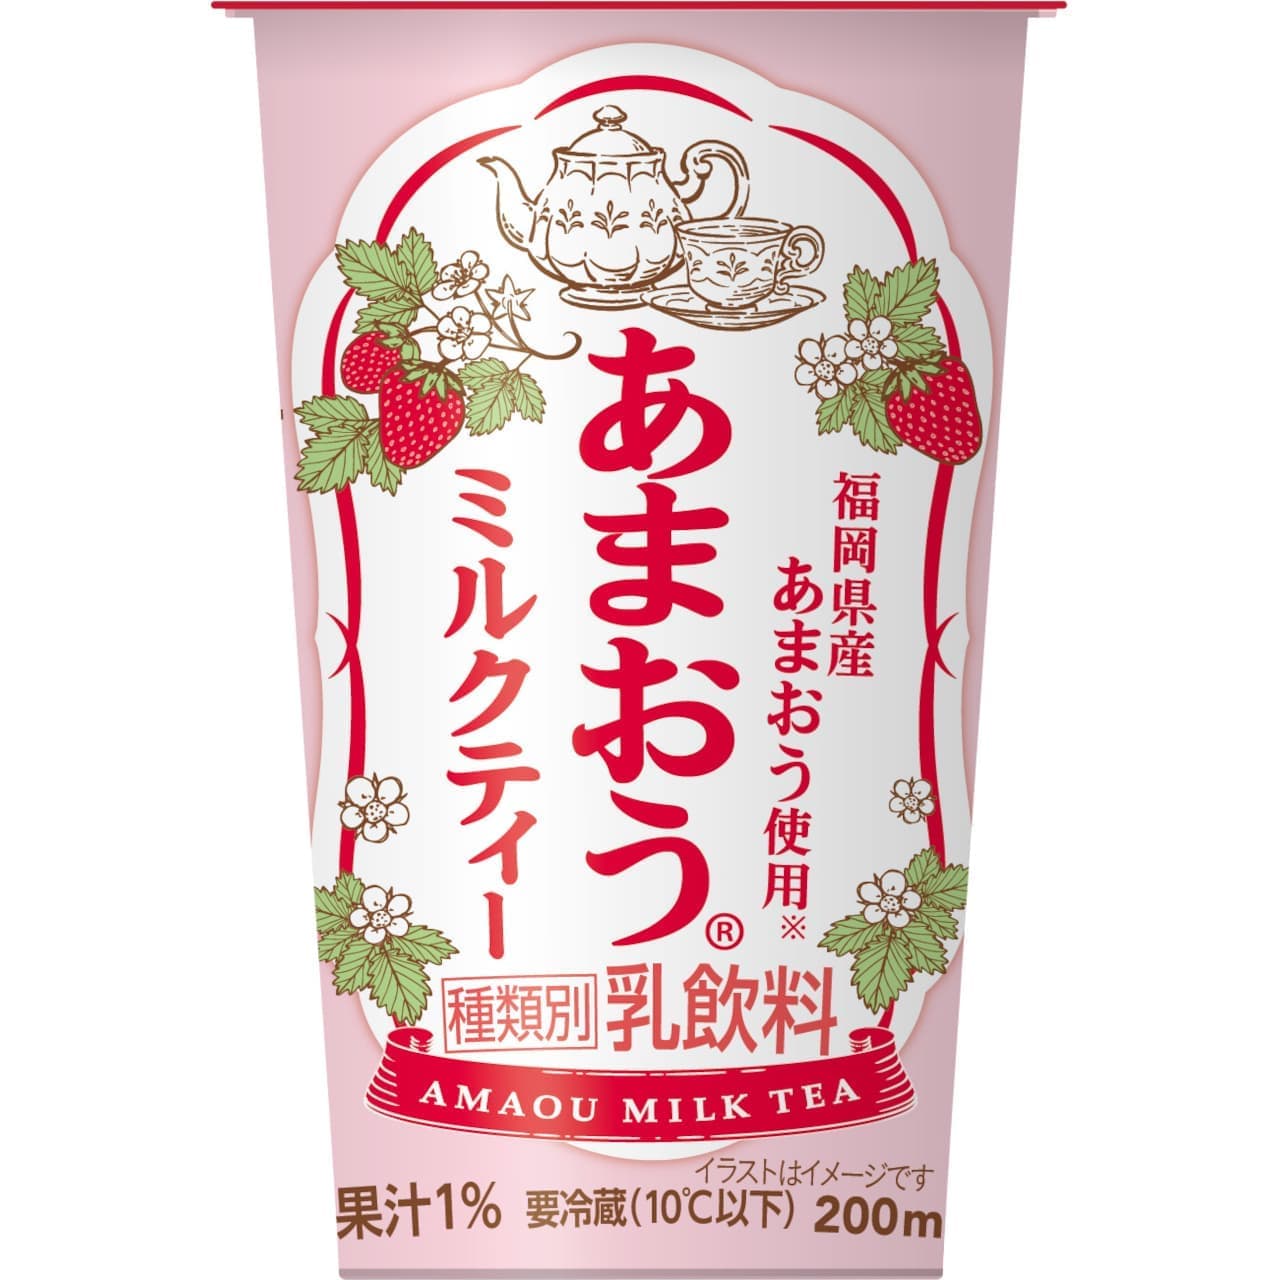 FamilyMart "Amao Milk Tea